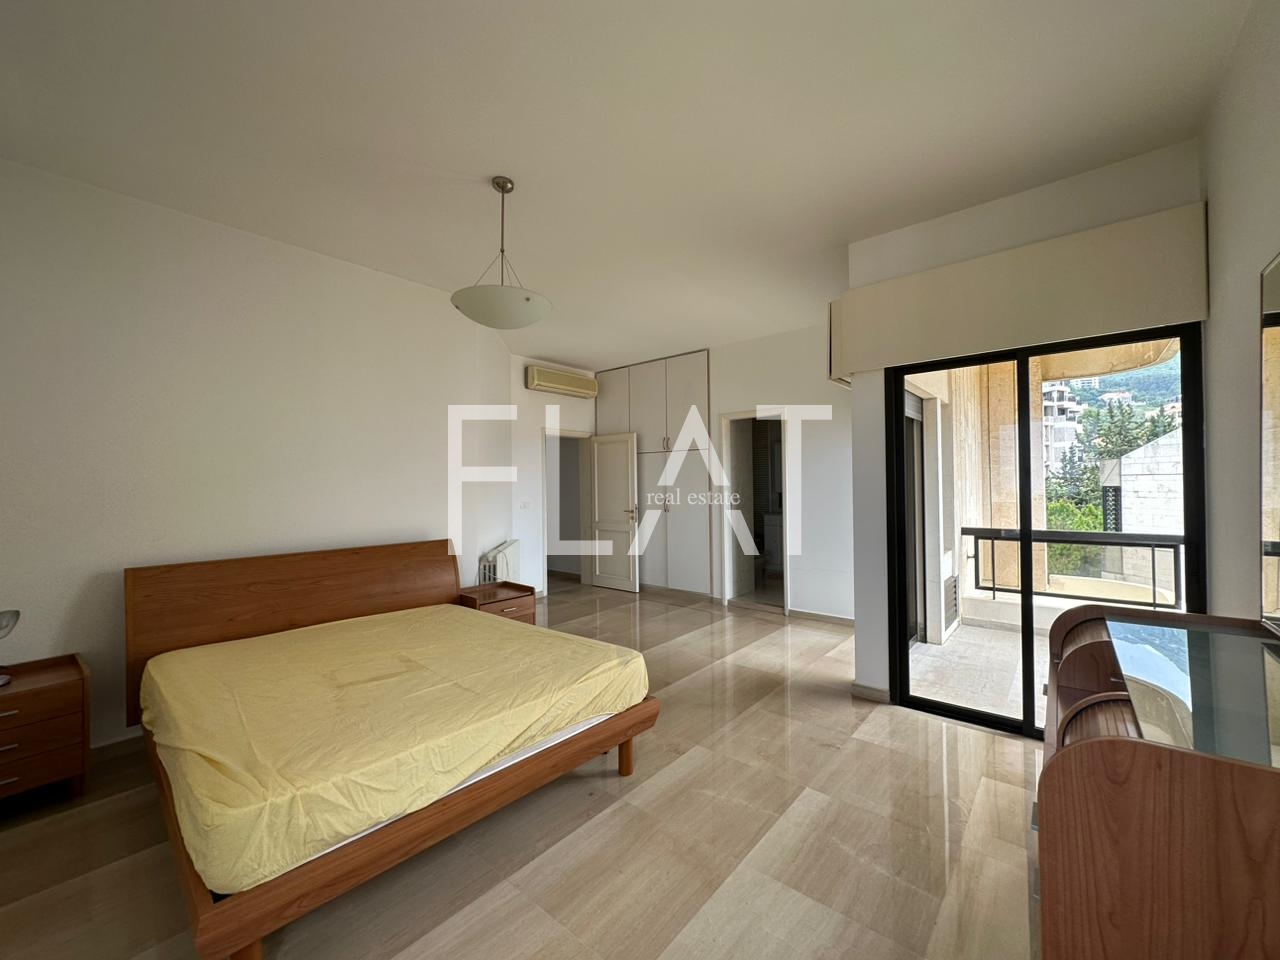 Furnished apartment for rent in kfarehbab | 1000 $